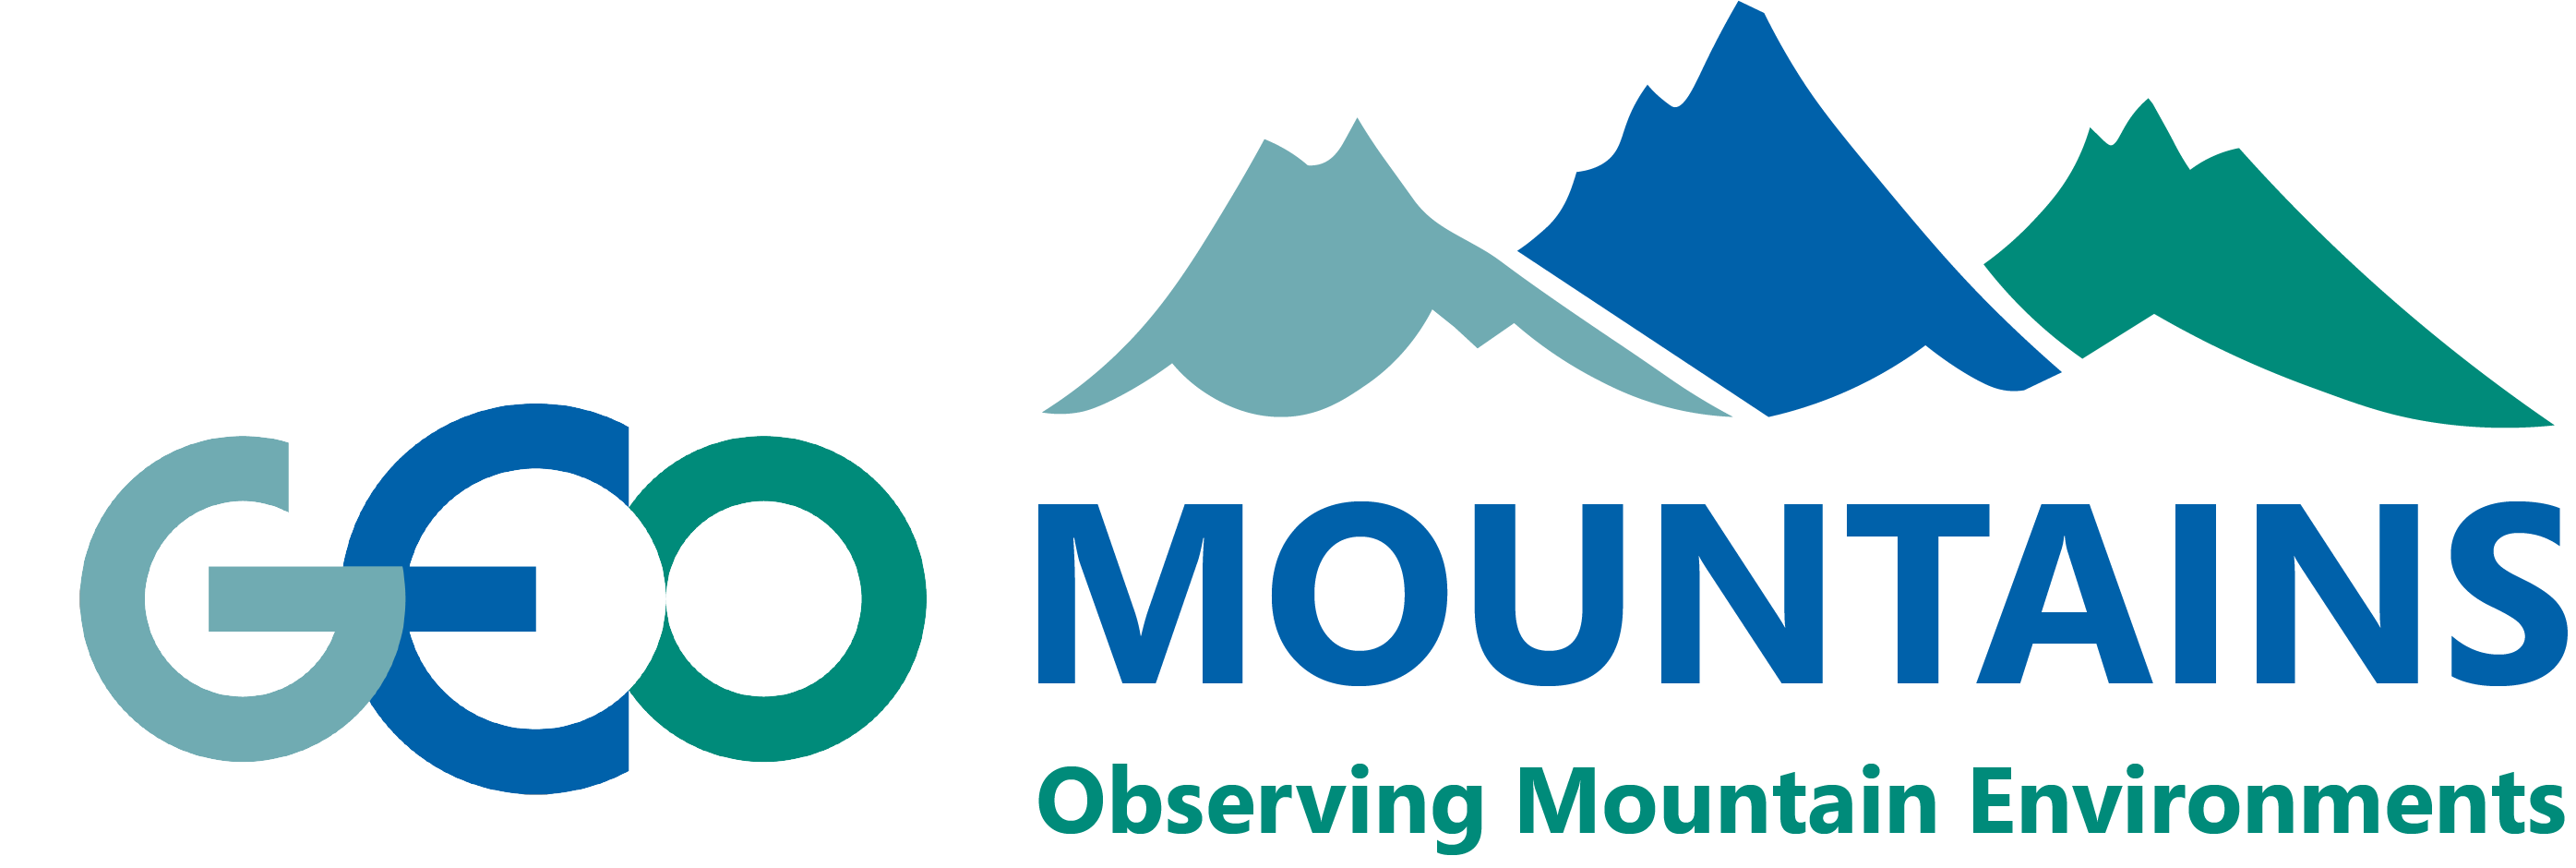 GEO-Mountains-Logo-Tagline.png